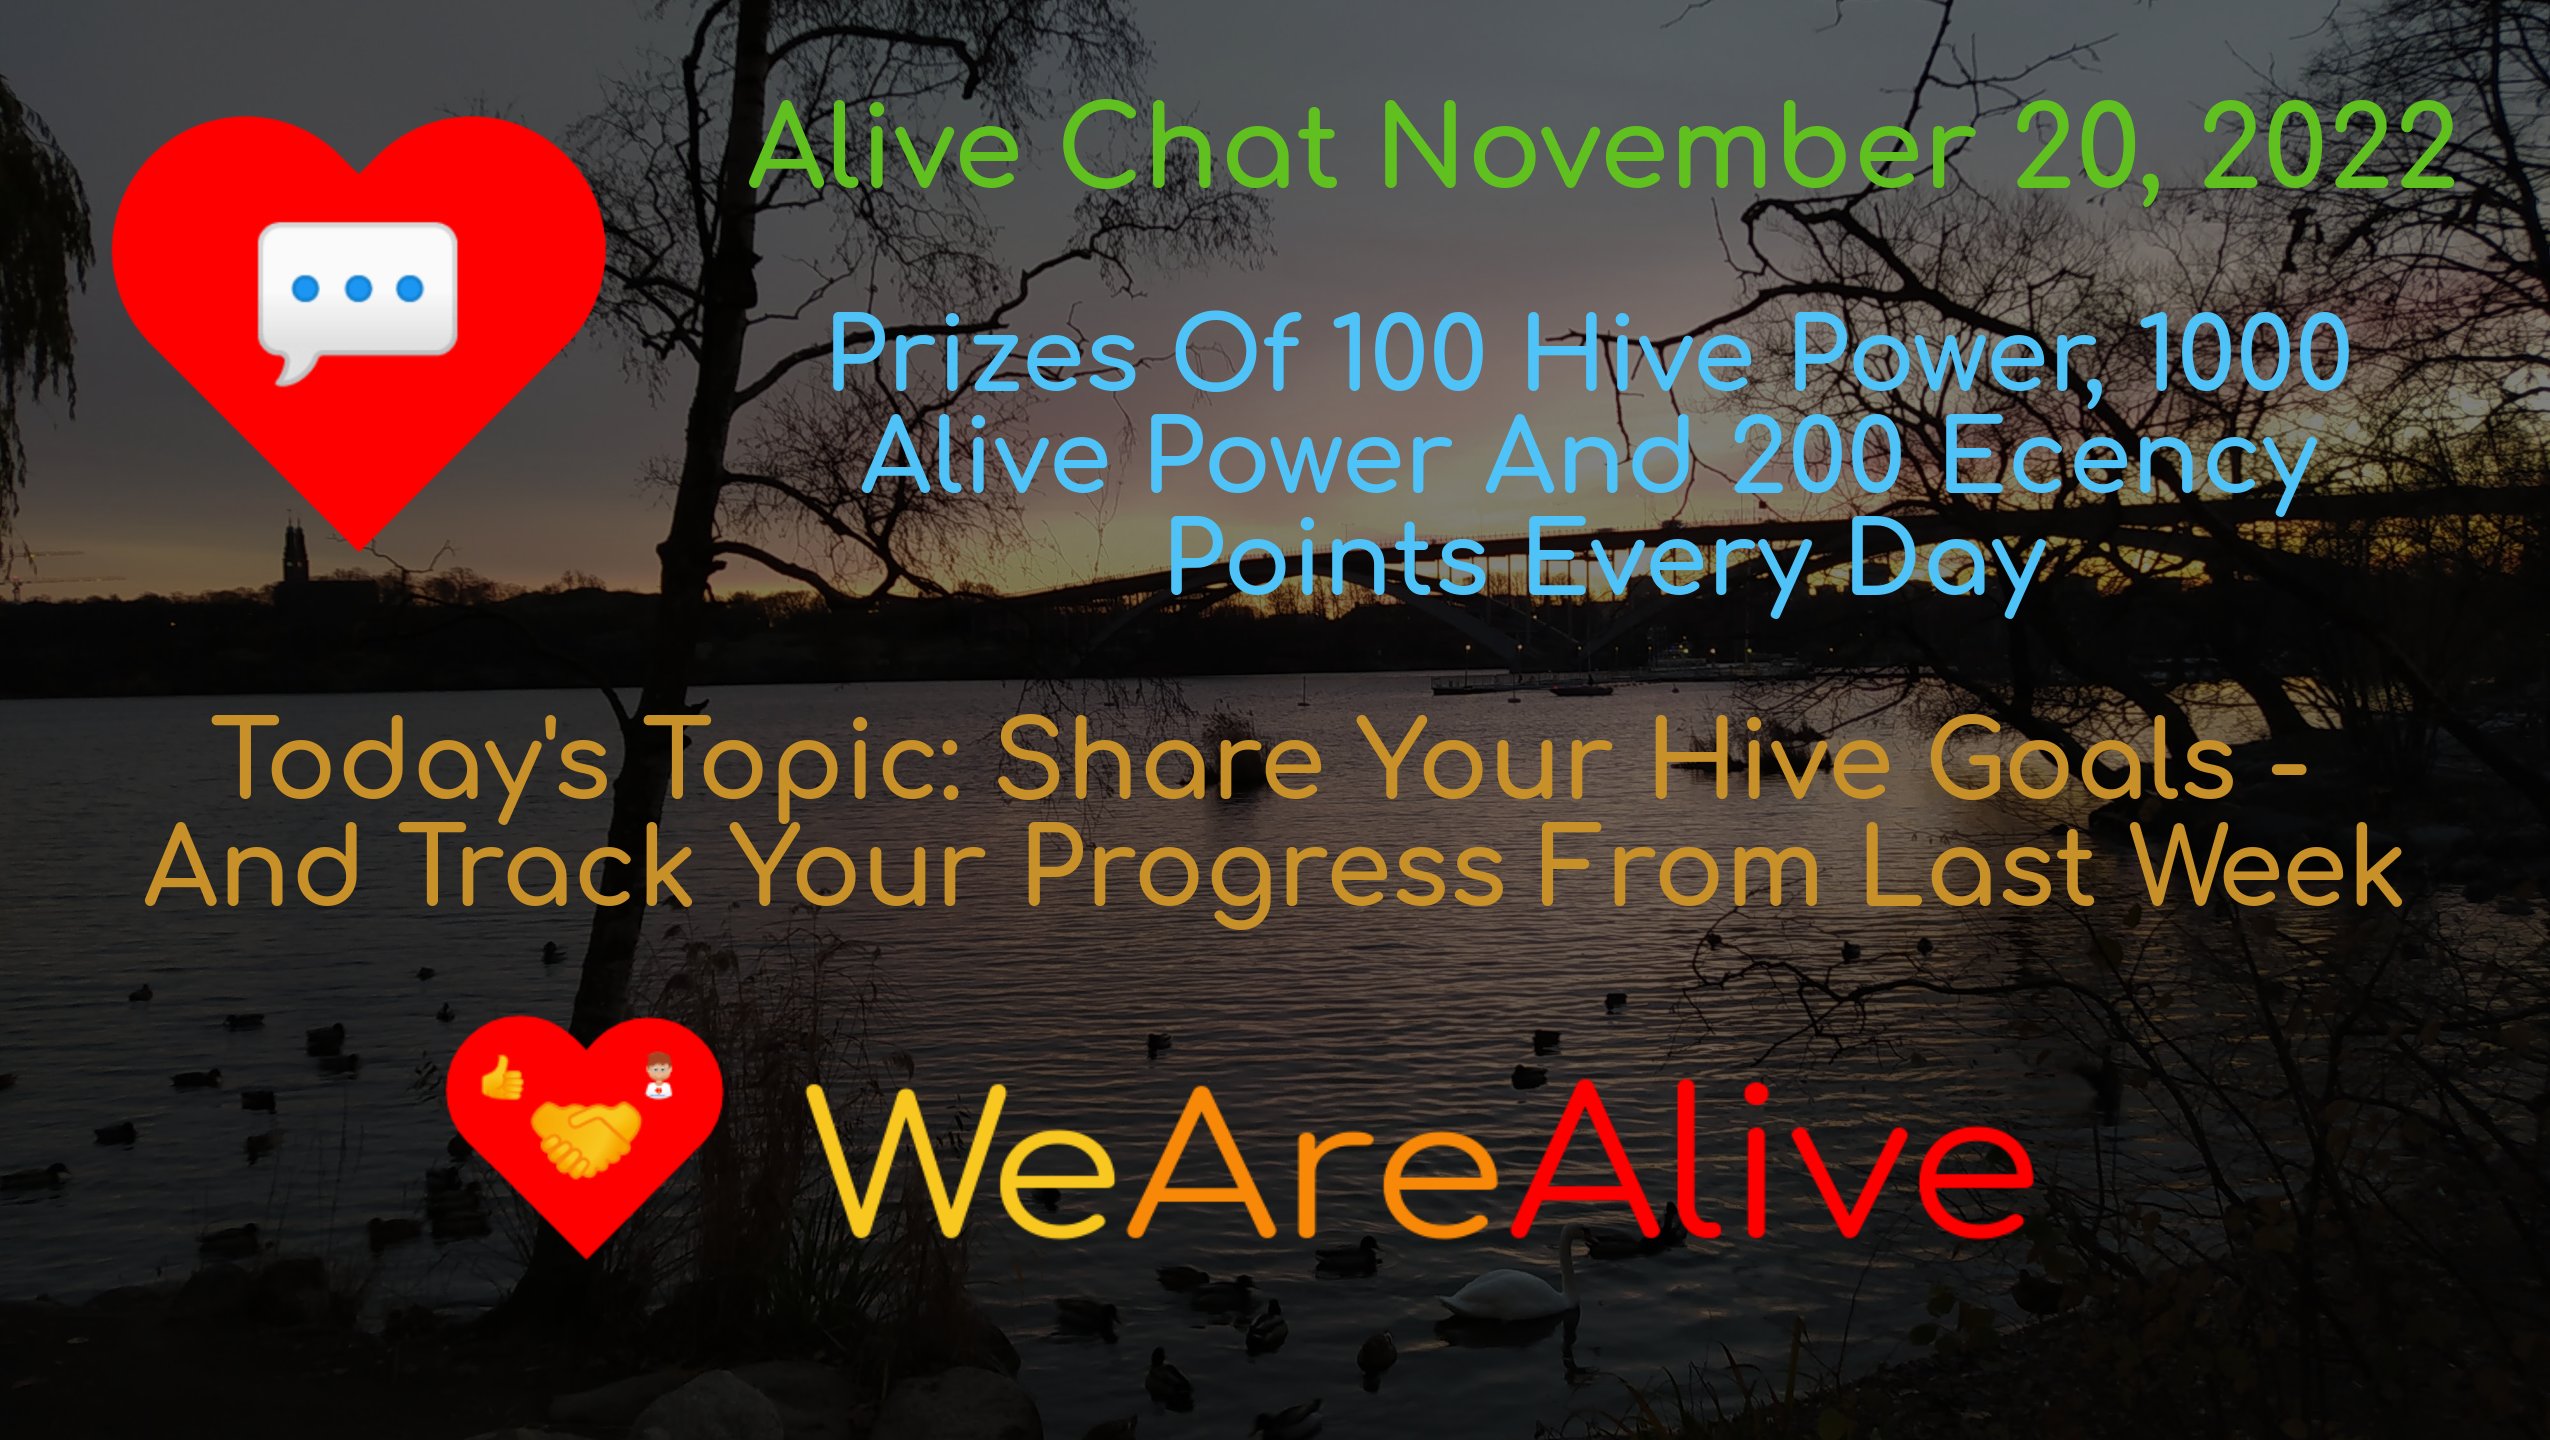 @alive.chat/alive-chat-november-20-2022